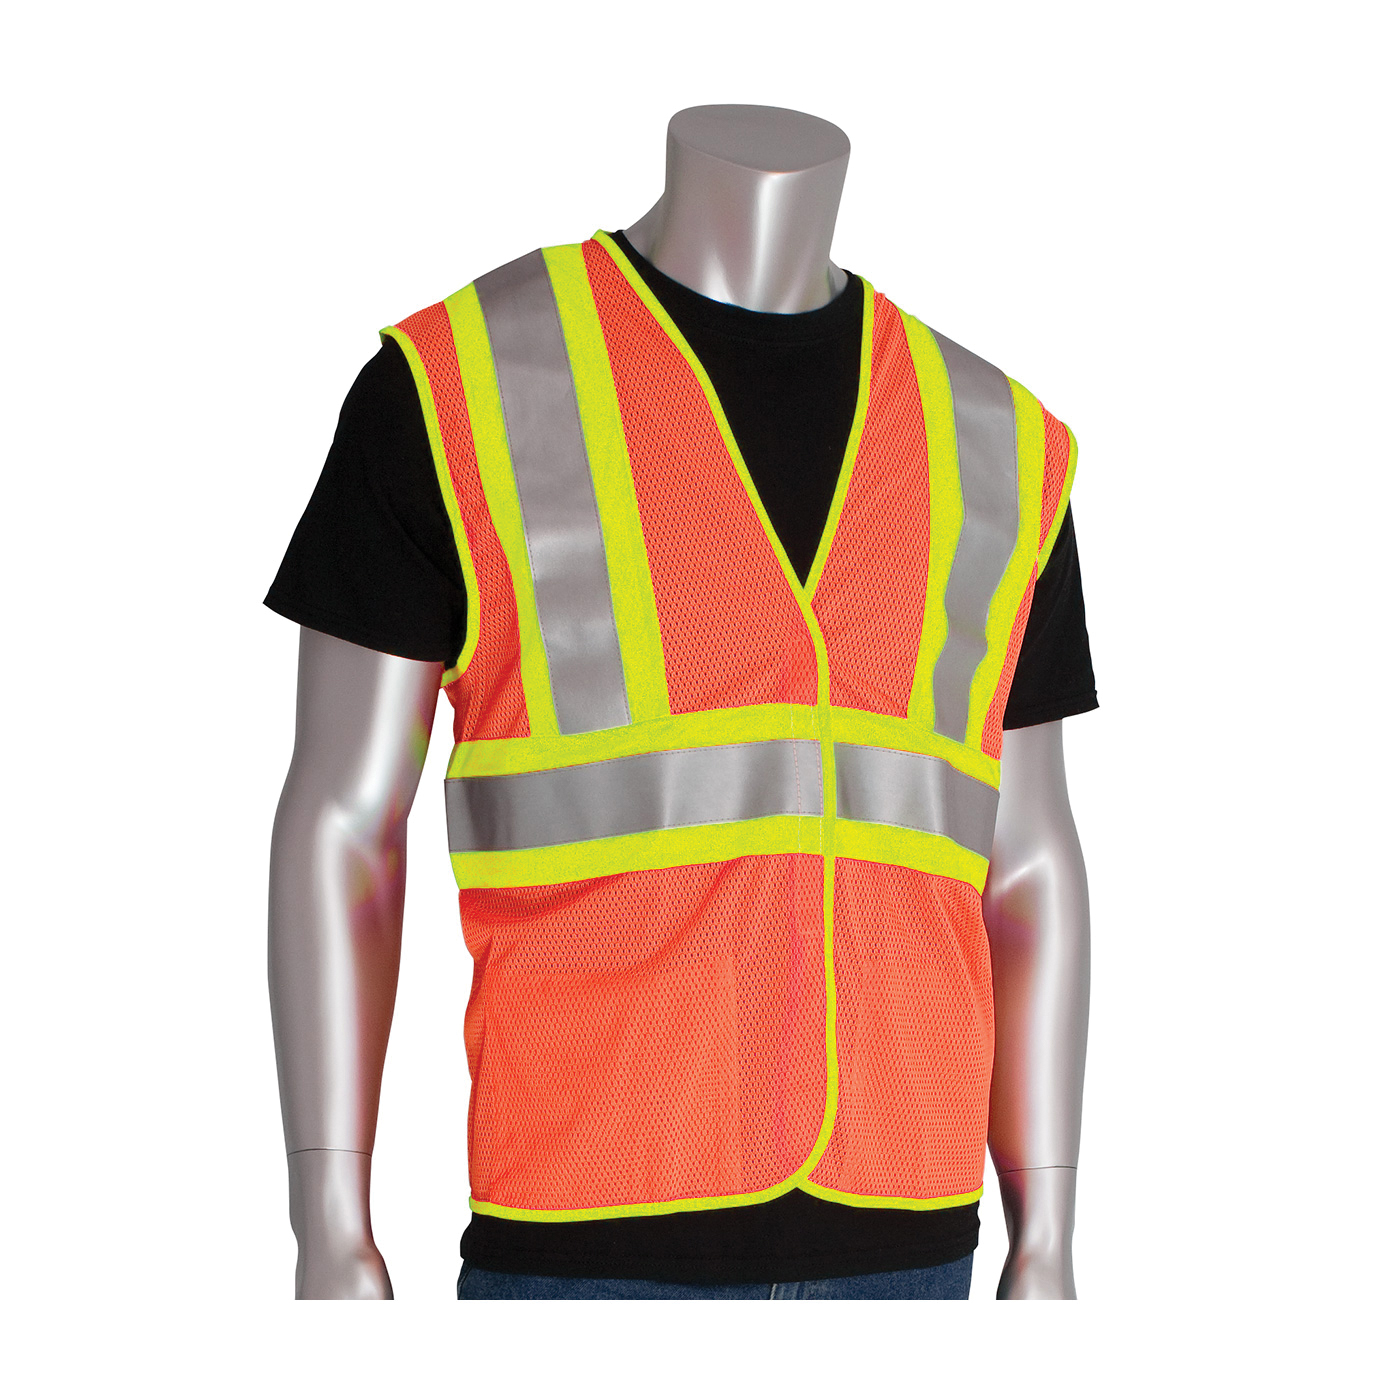 PIP® 305-MVFROR-L/XL 2-Tone FR Treated Safety Vest, L to XL, Hi-Viz Orange, Polyester, Hook and Loop Closure, 2 Pockets, ANSI Class: Class 2, ANSI Specified